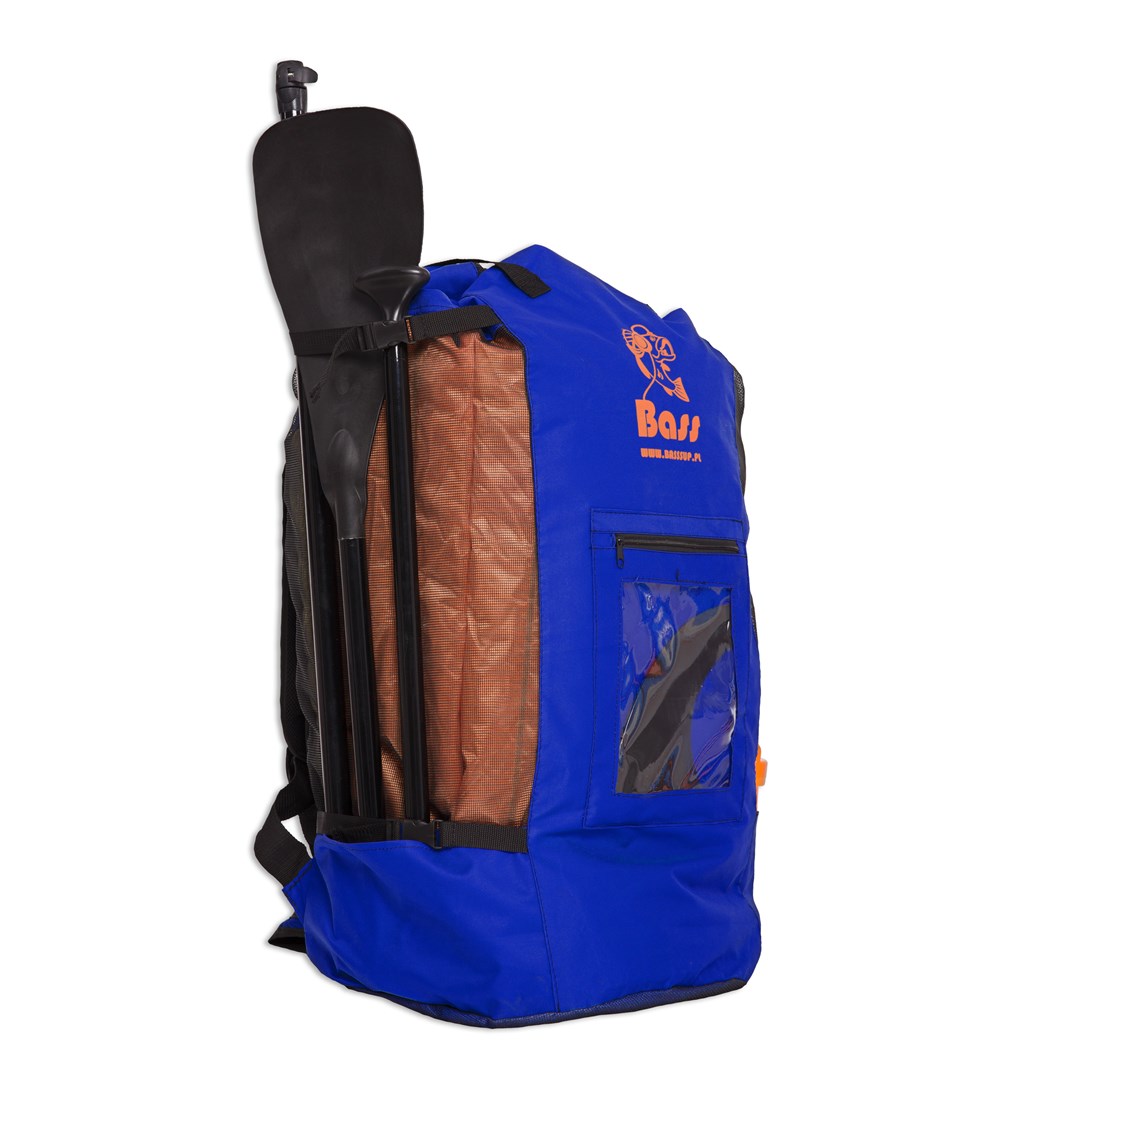 BASS Wind - Backpack